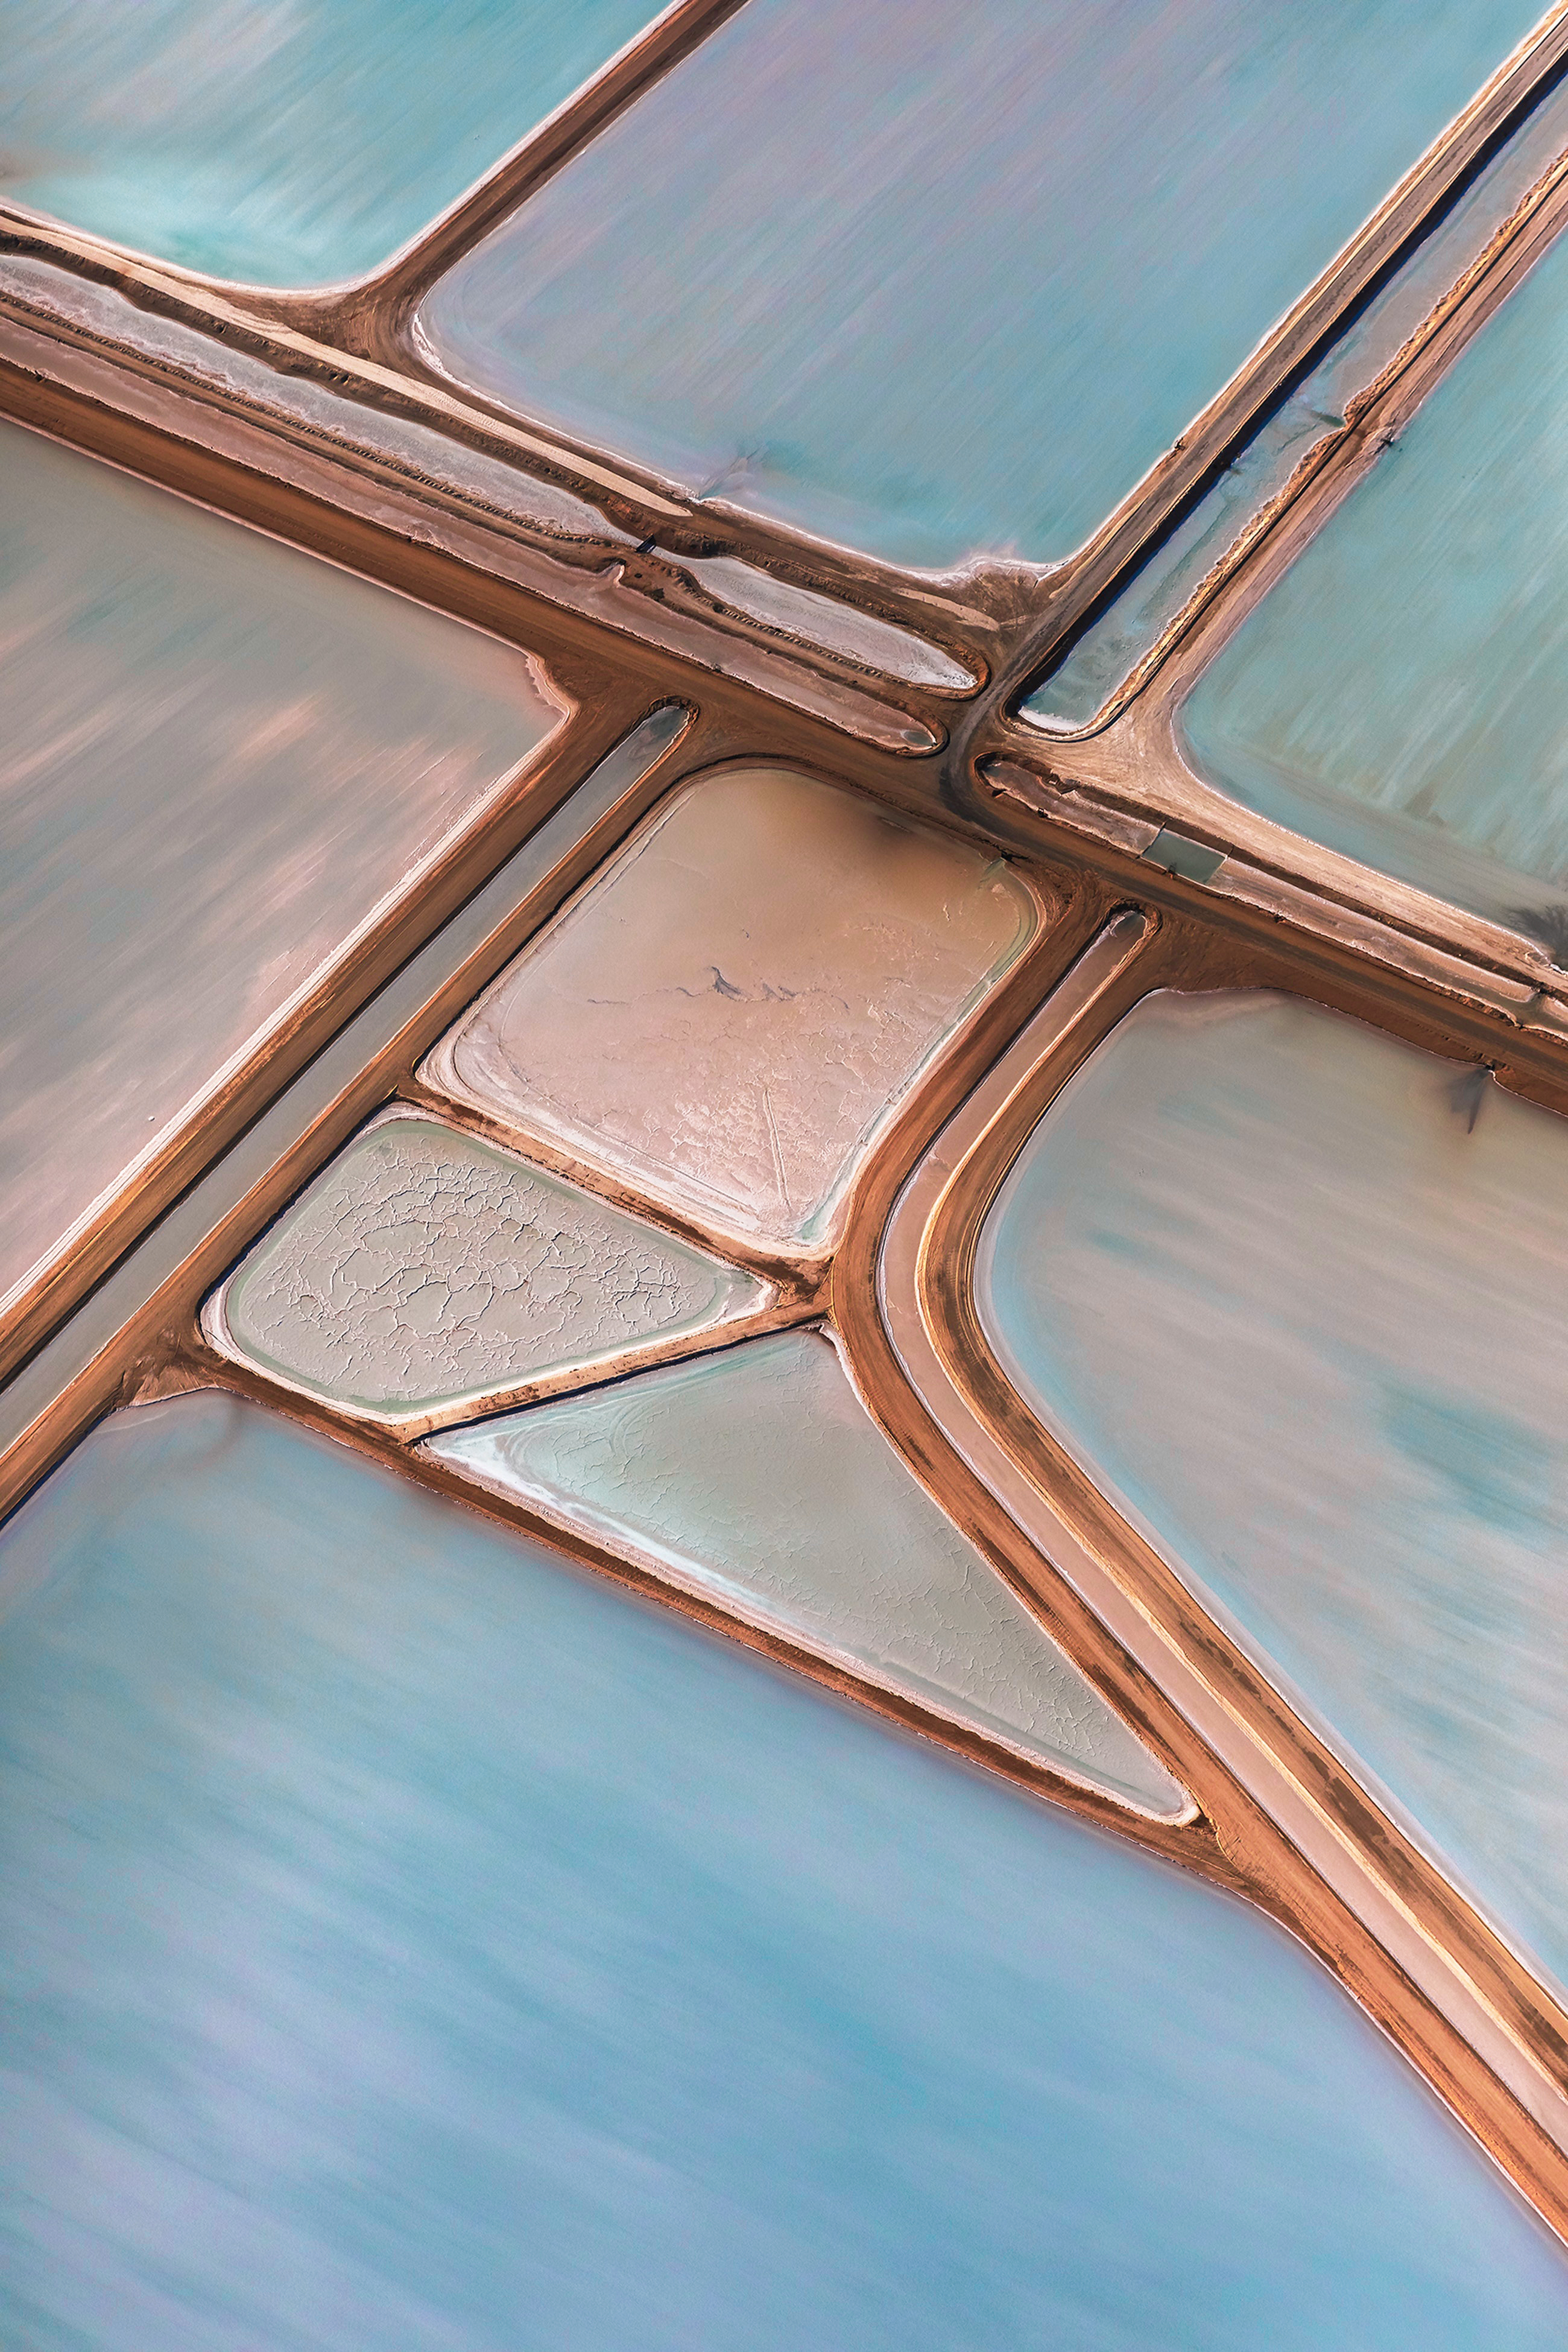 Abstract Aerial of Salt Farm by Craig Hammersley